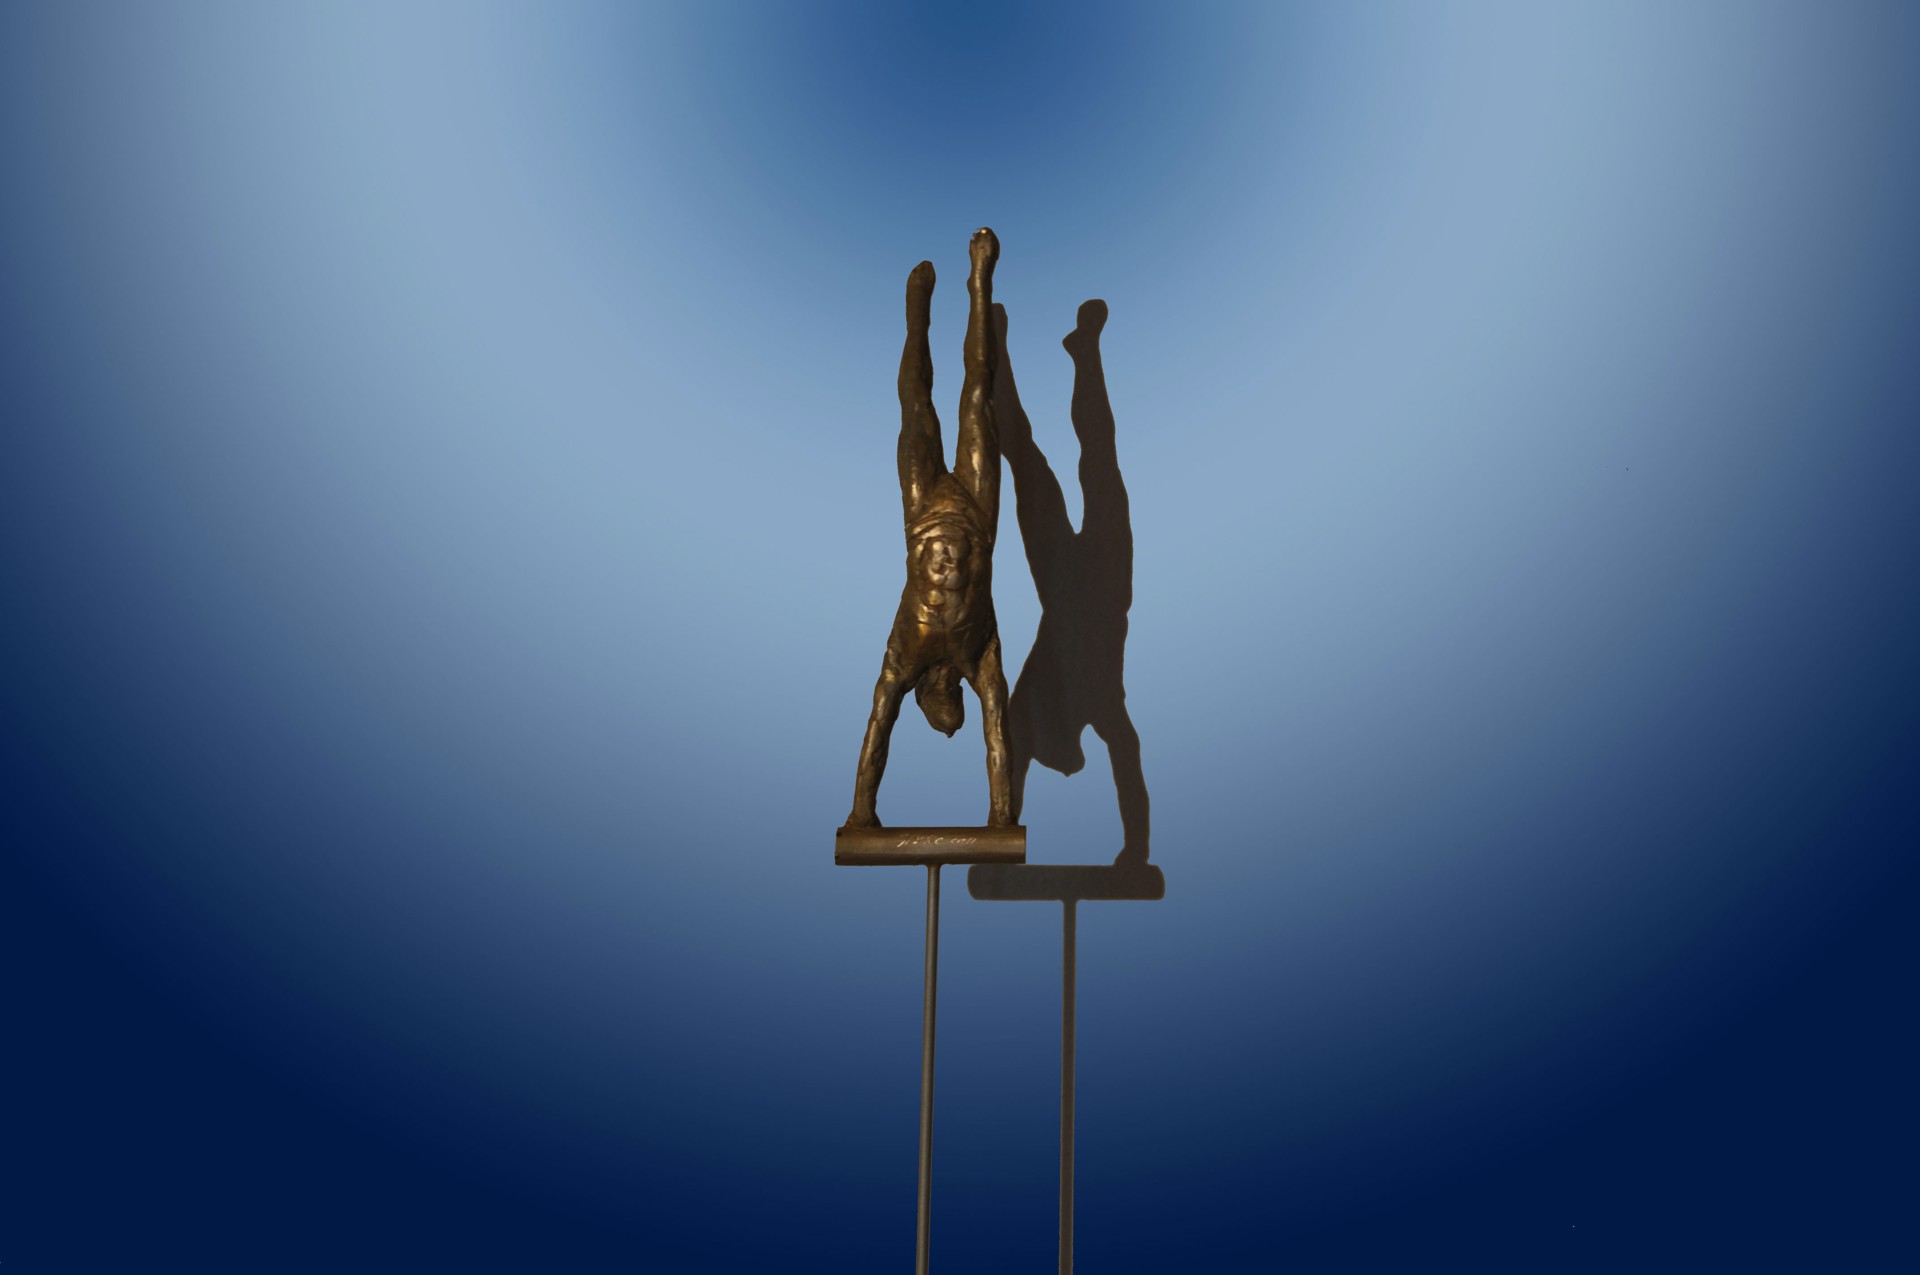 Balance Series:  Handstand by Bill Starke